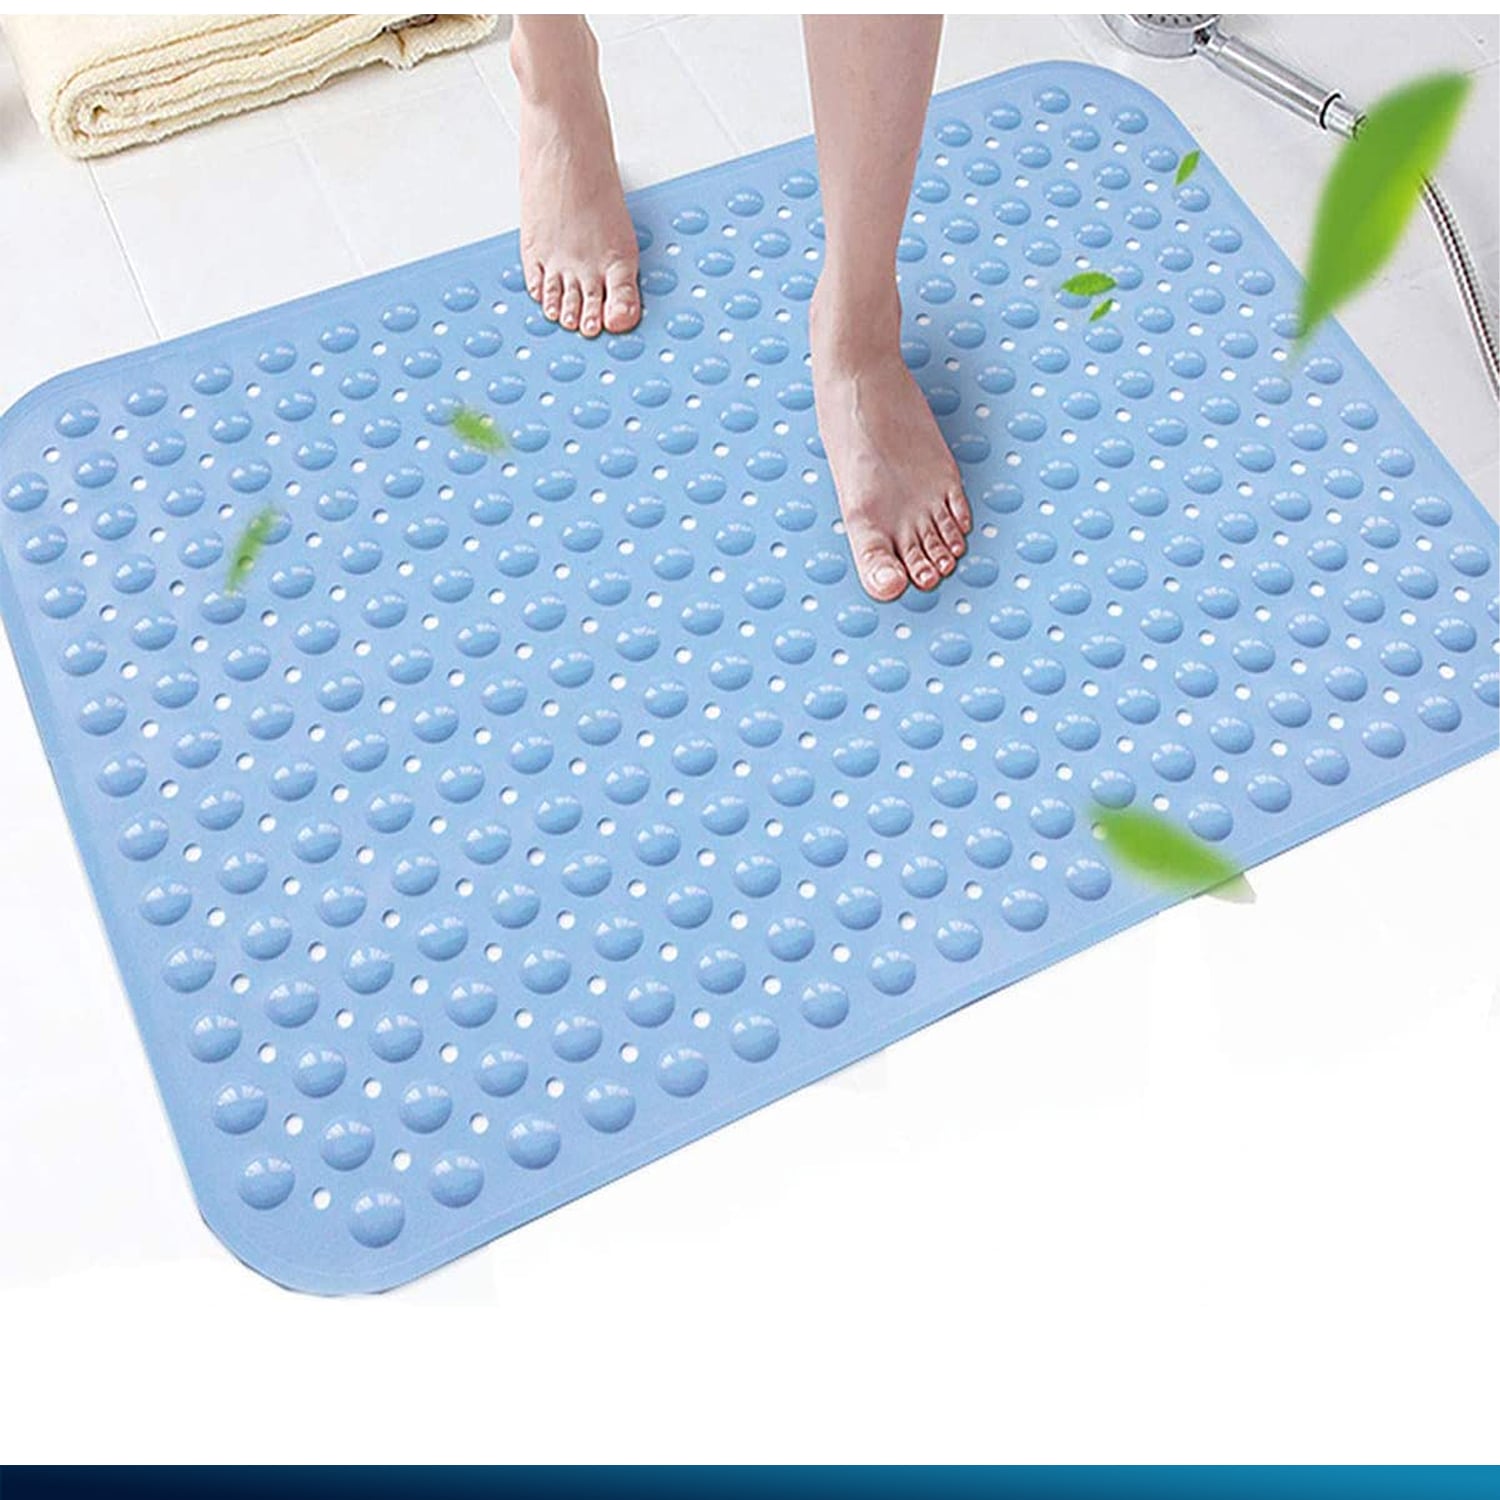 Experia Anti-Slip with Suction Cup Bath Mat, 106 x 60cm Blue (Soft-Pebble) LifeKrafts